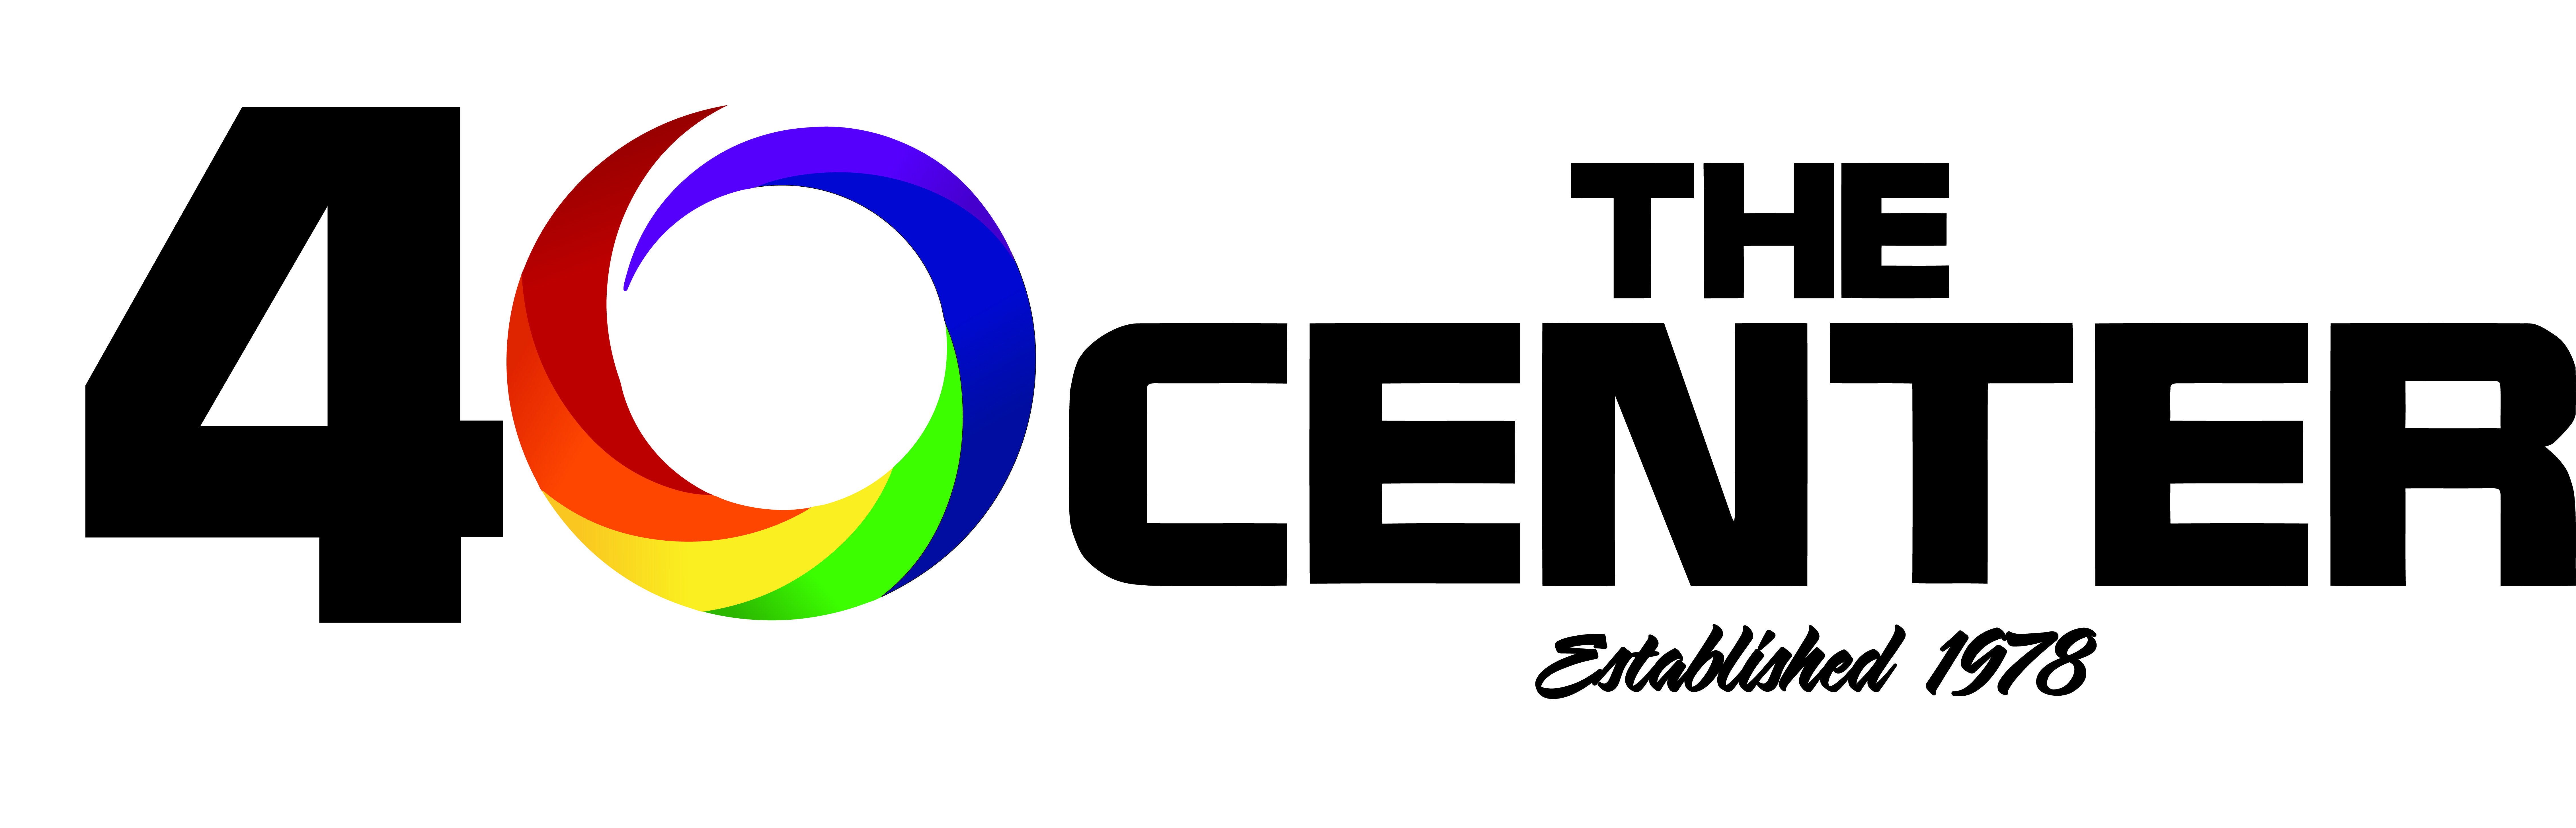 LGBTQ Logo - Orlando's LGBTQ Center changes name, debuts new logo - Watermark Online